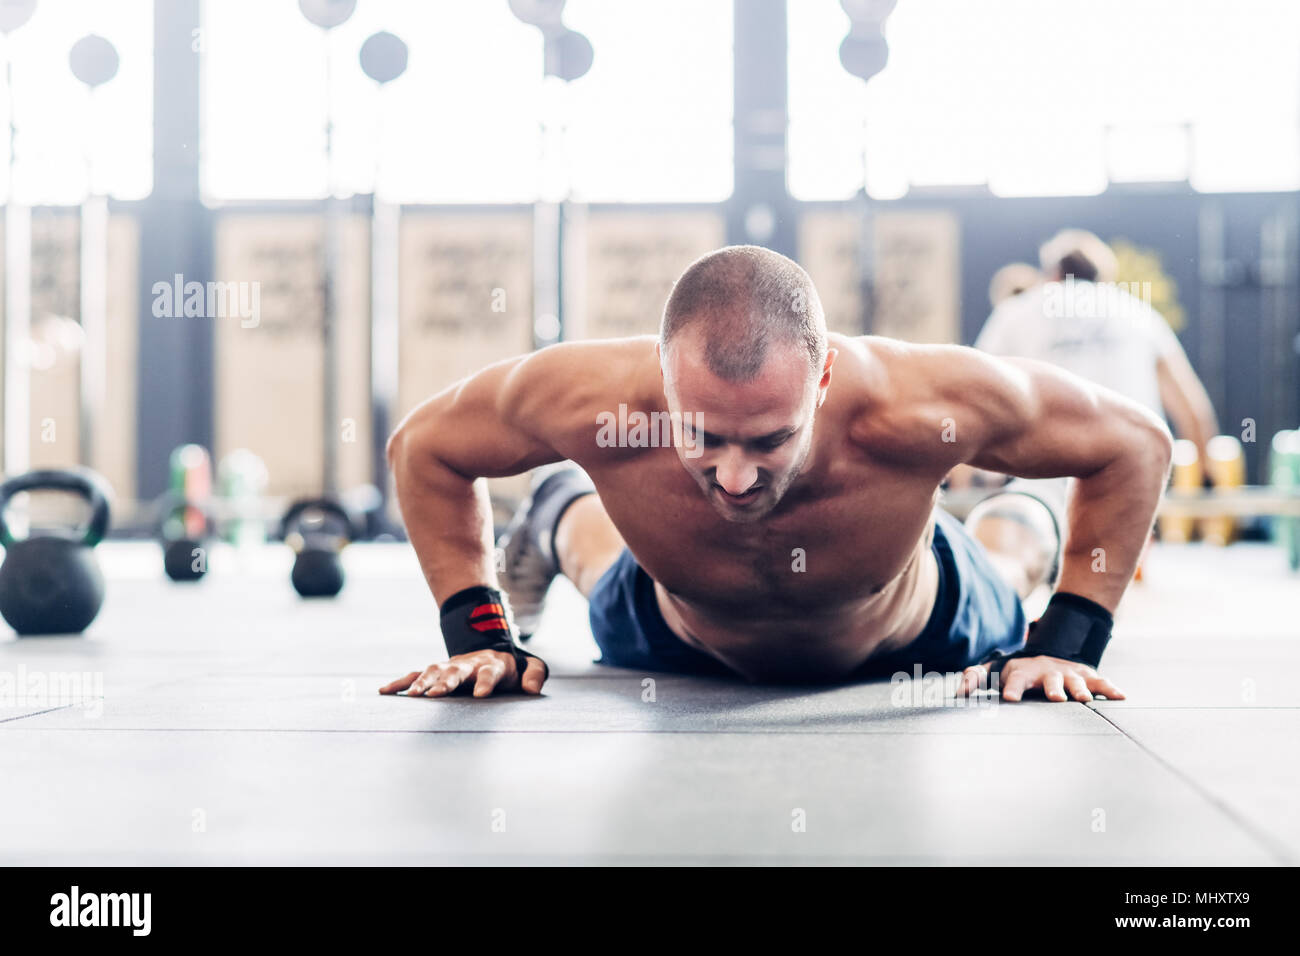 Man doing pushup in gym Stock Photo